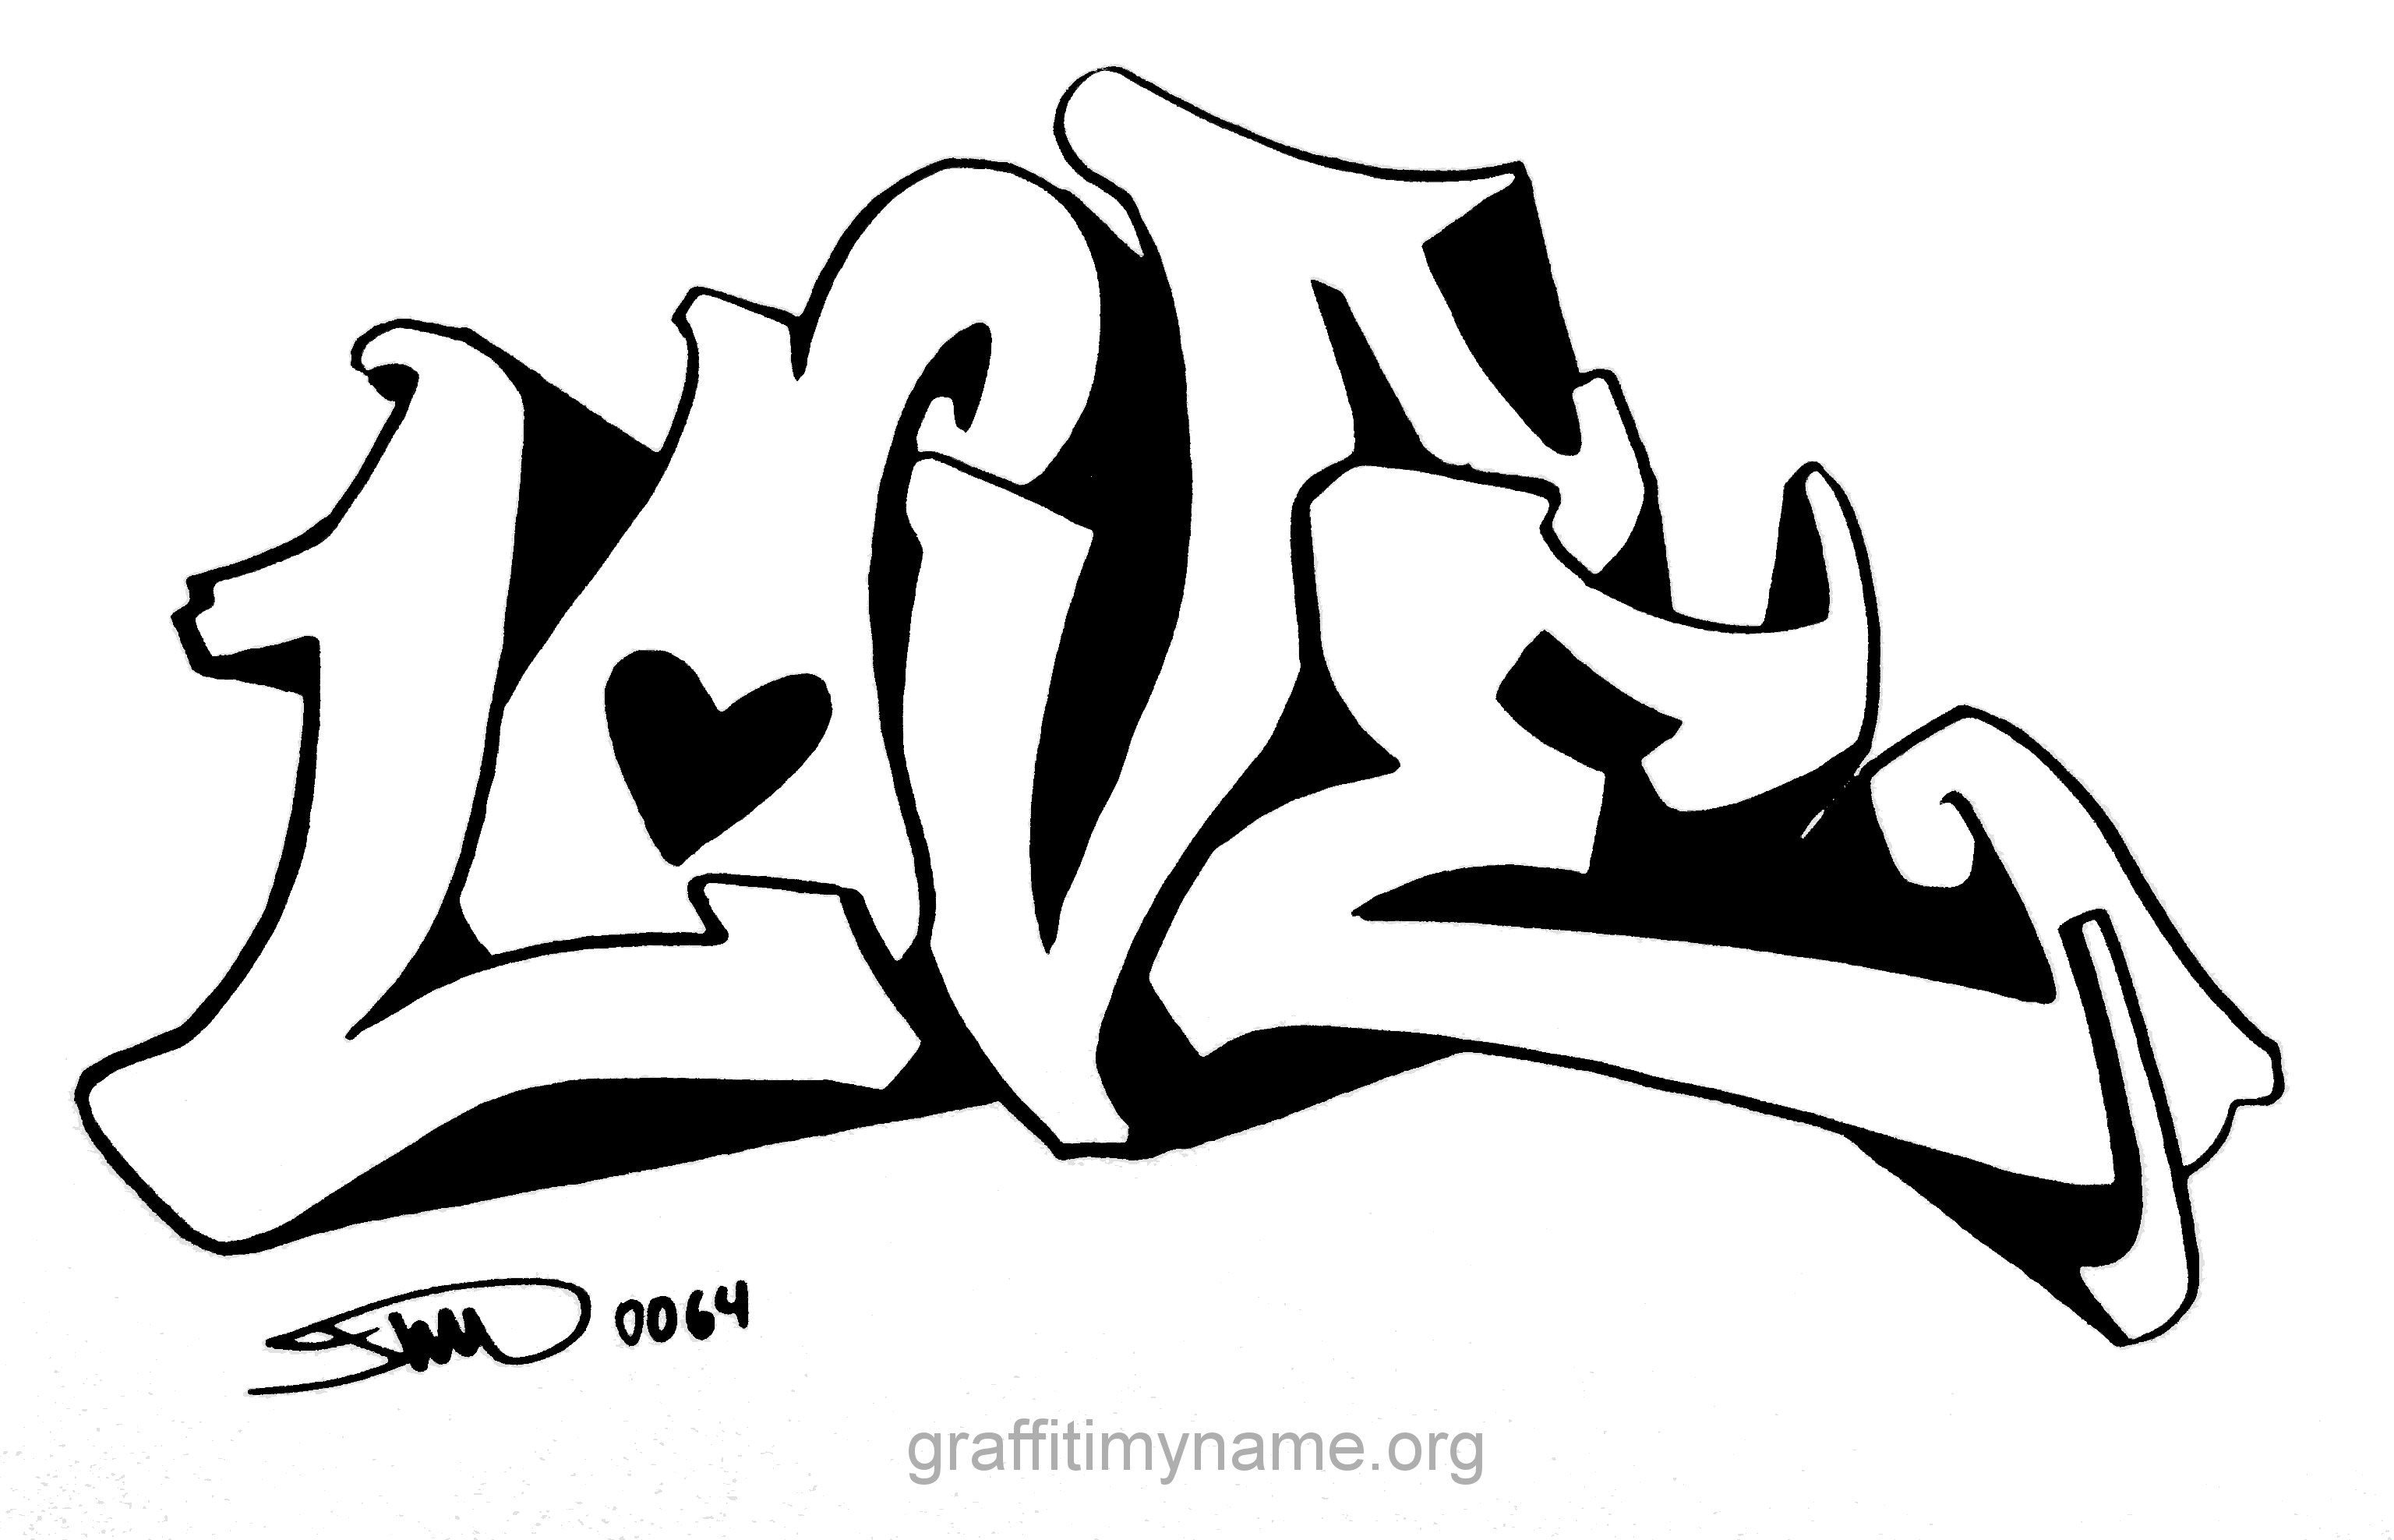 9 Pics of Love You Graffiti Coloring Pages - I Love You Graffiti ...